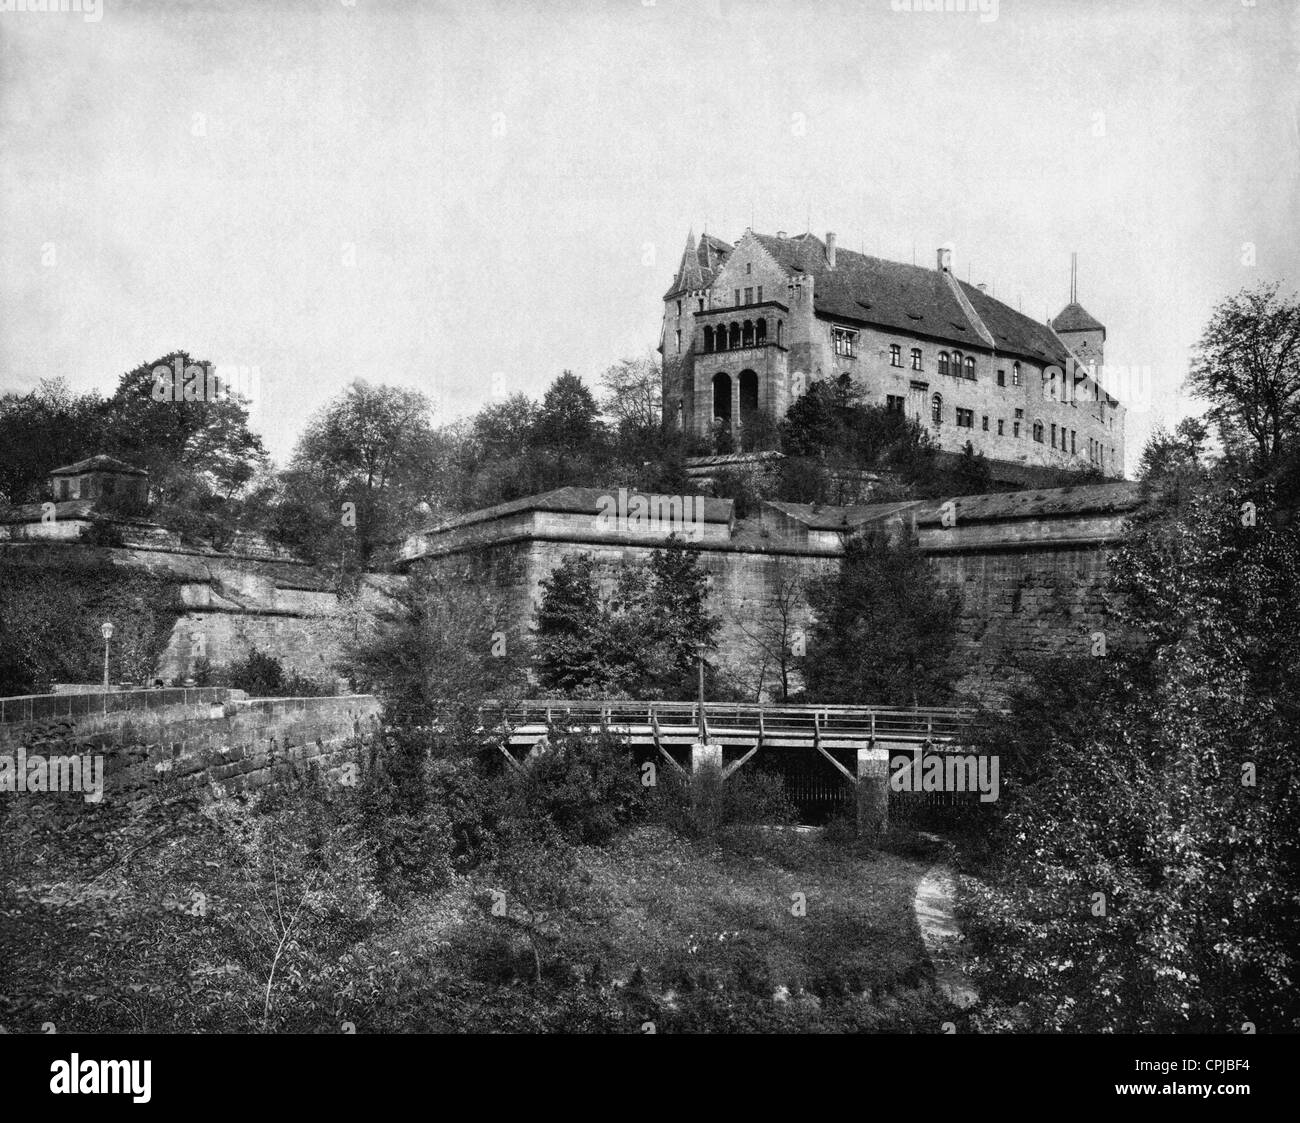 Emperor's castle in Nuremberg Stock Photo